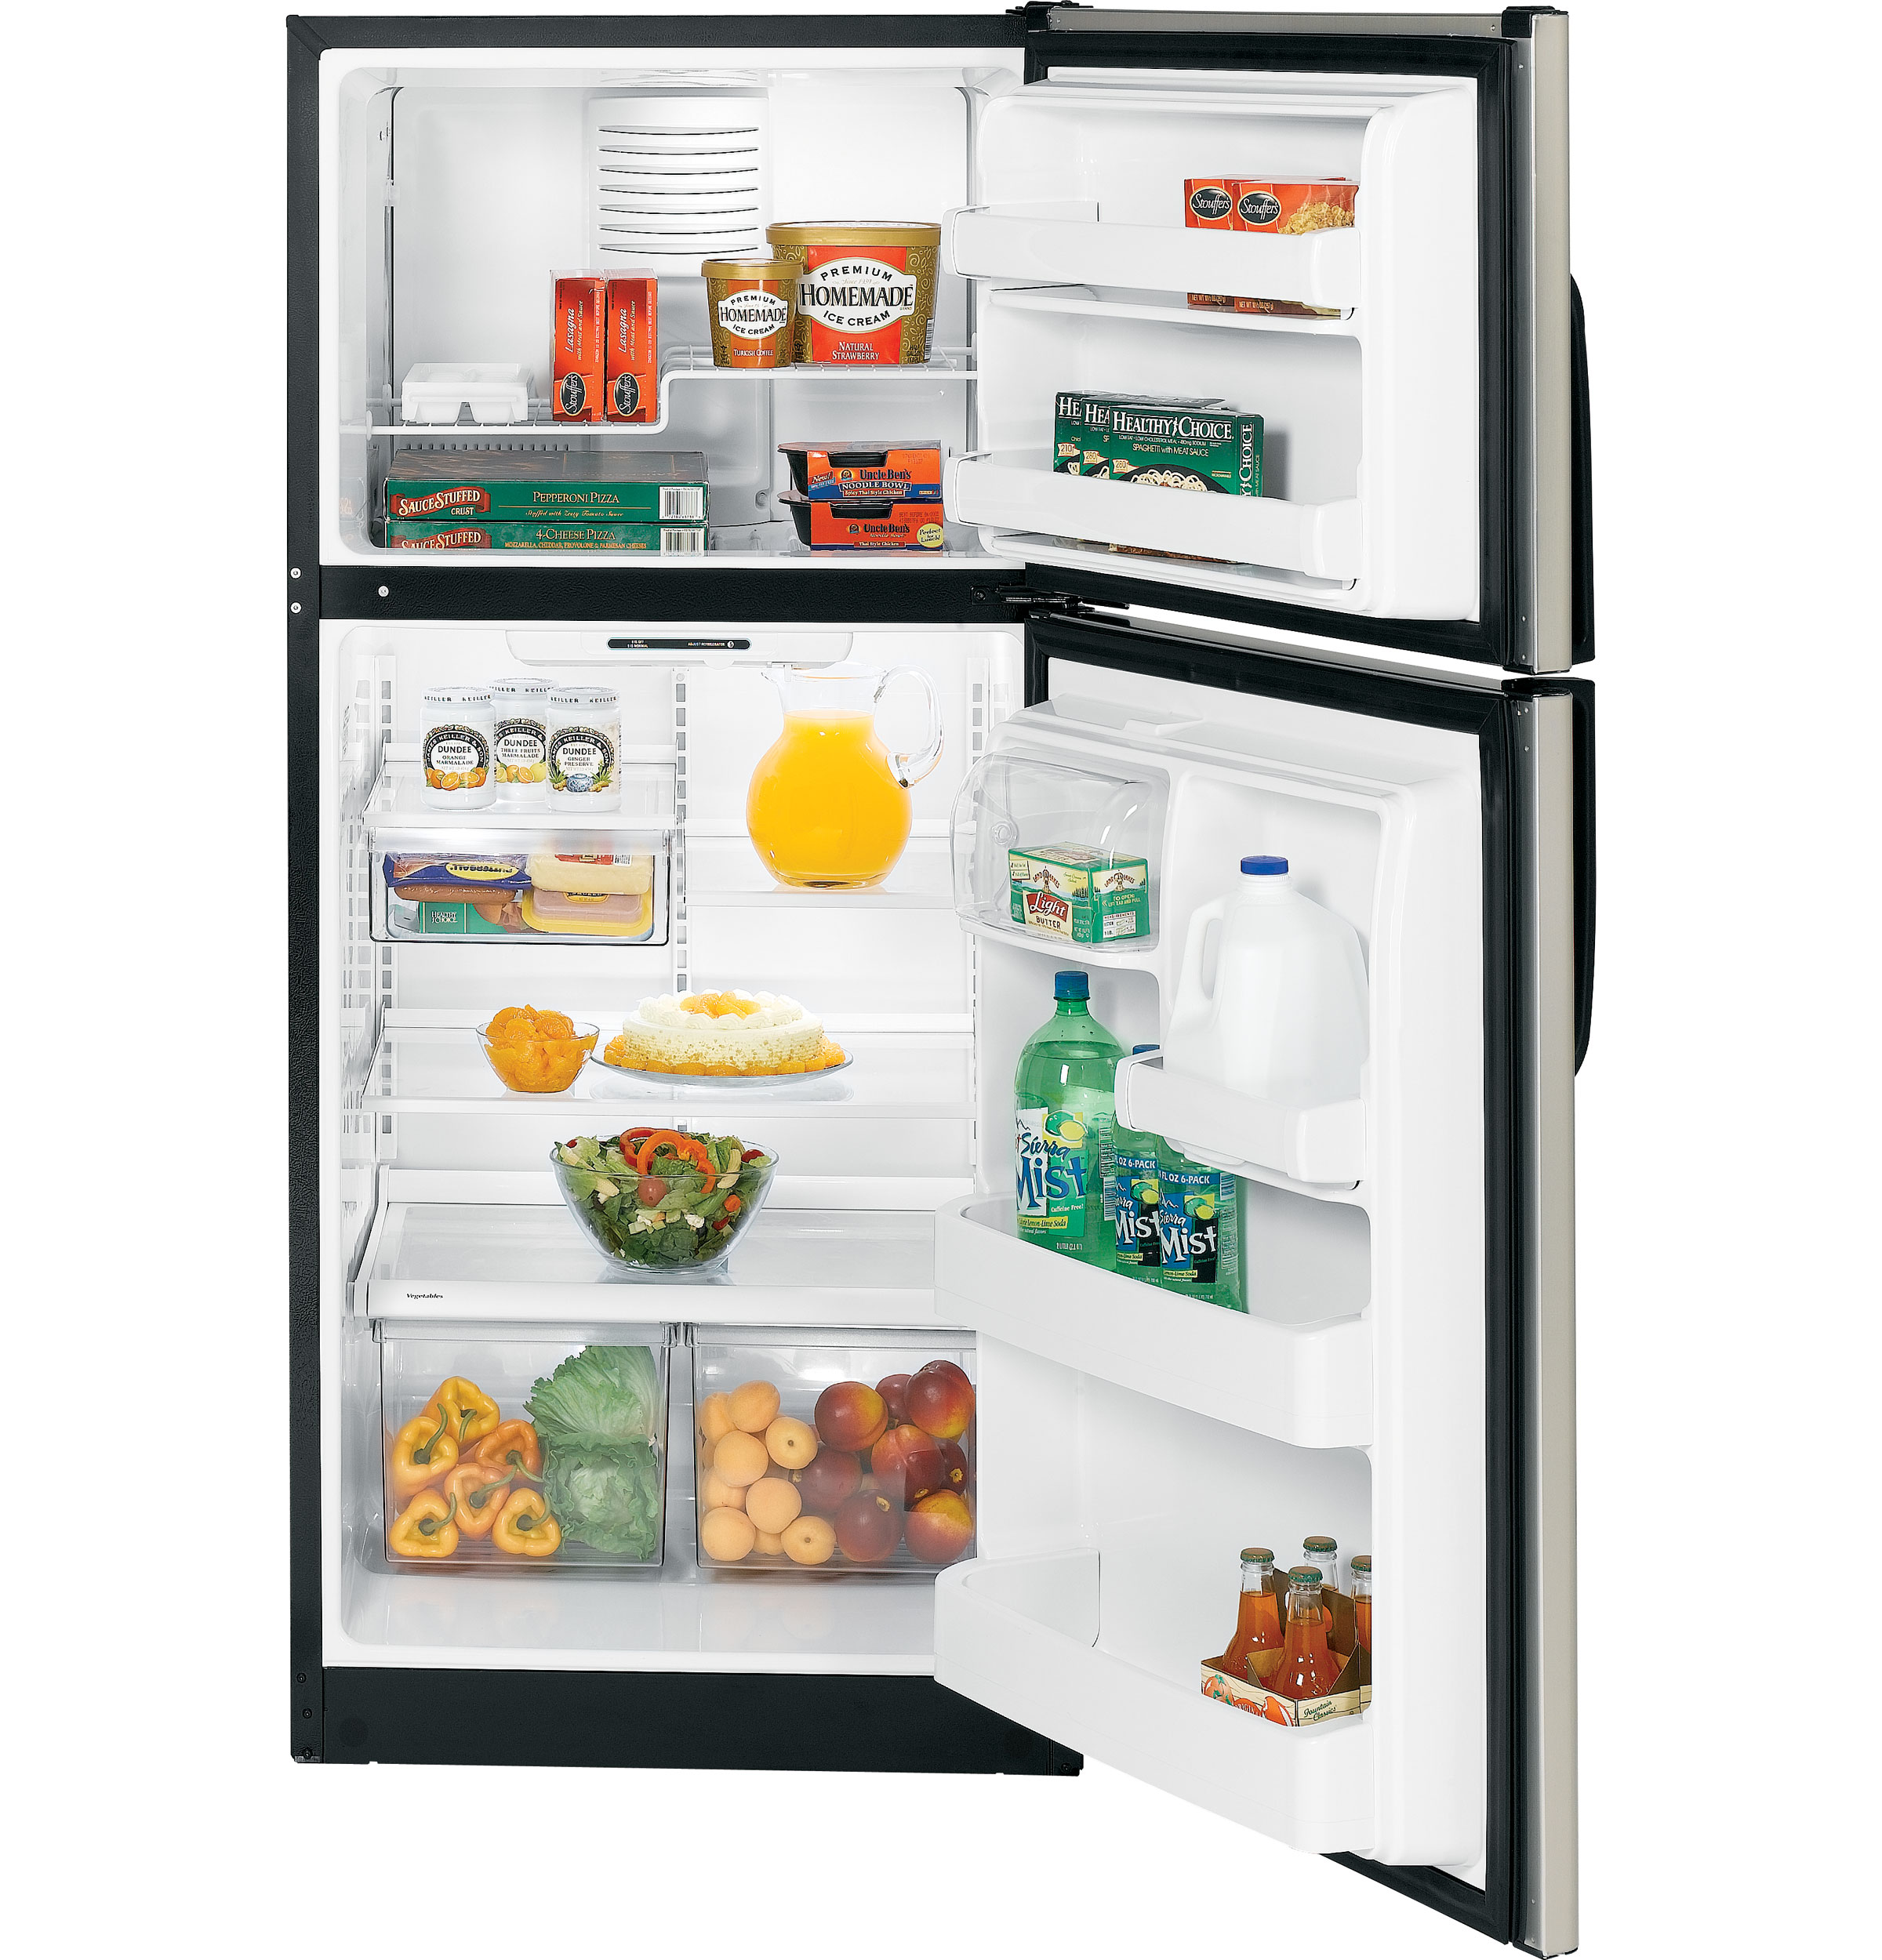 Hotpoint® 17.9 Cu. Ft. Capacity Top-Freezer Refrigerator